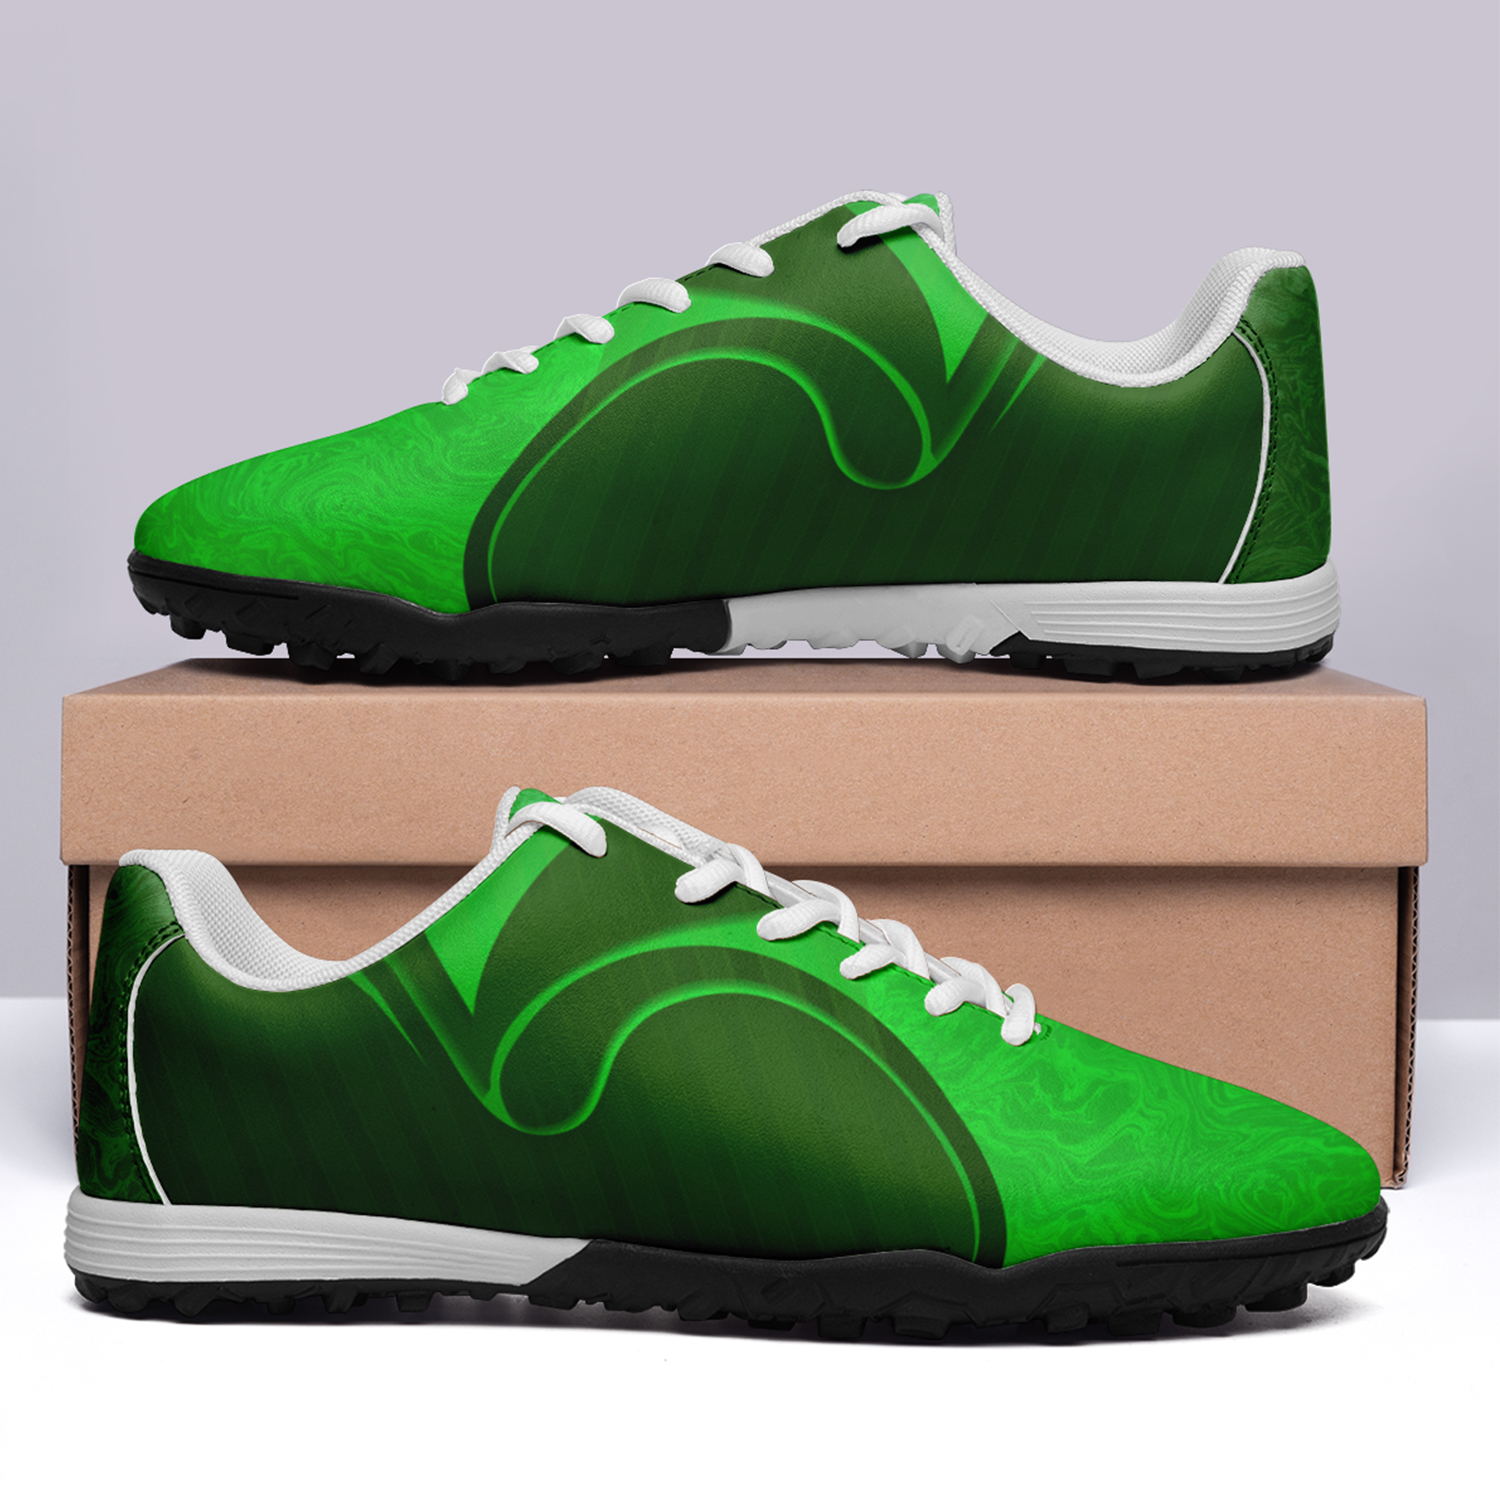 Custom Algeria Team Soccer Shoes Personalized Design Printing POD Football Shoes